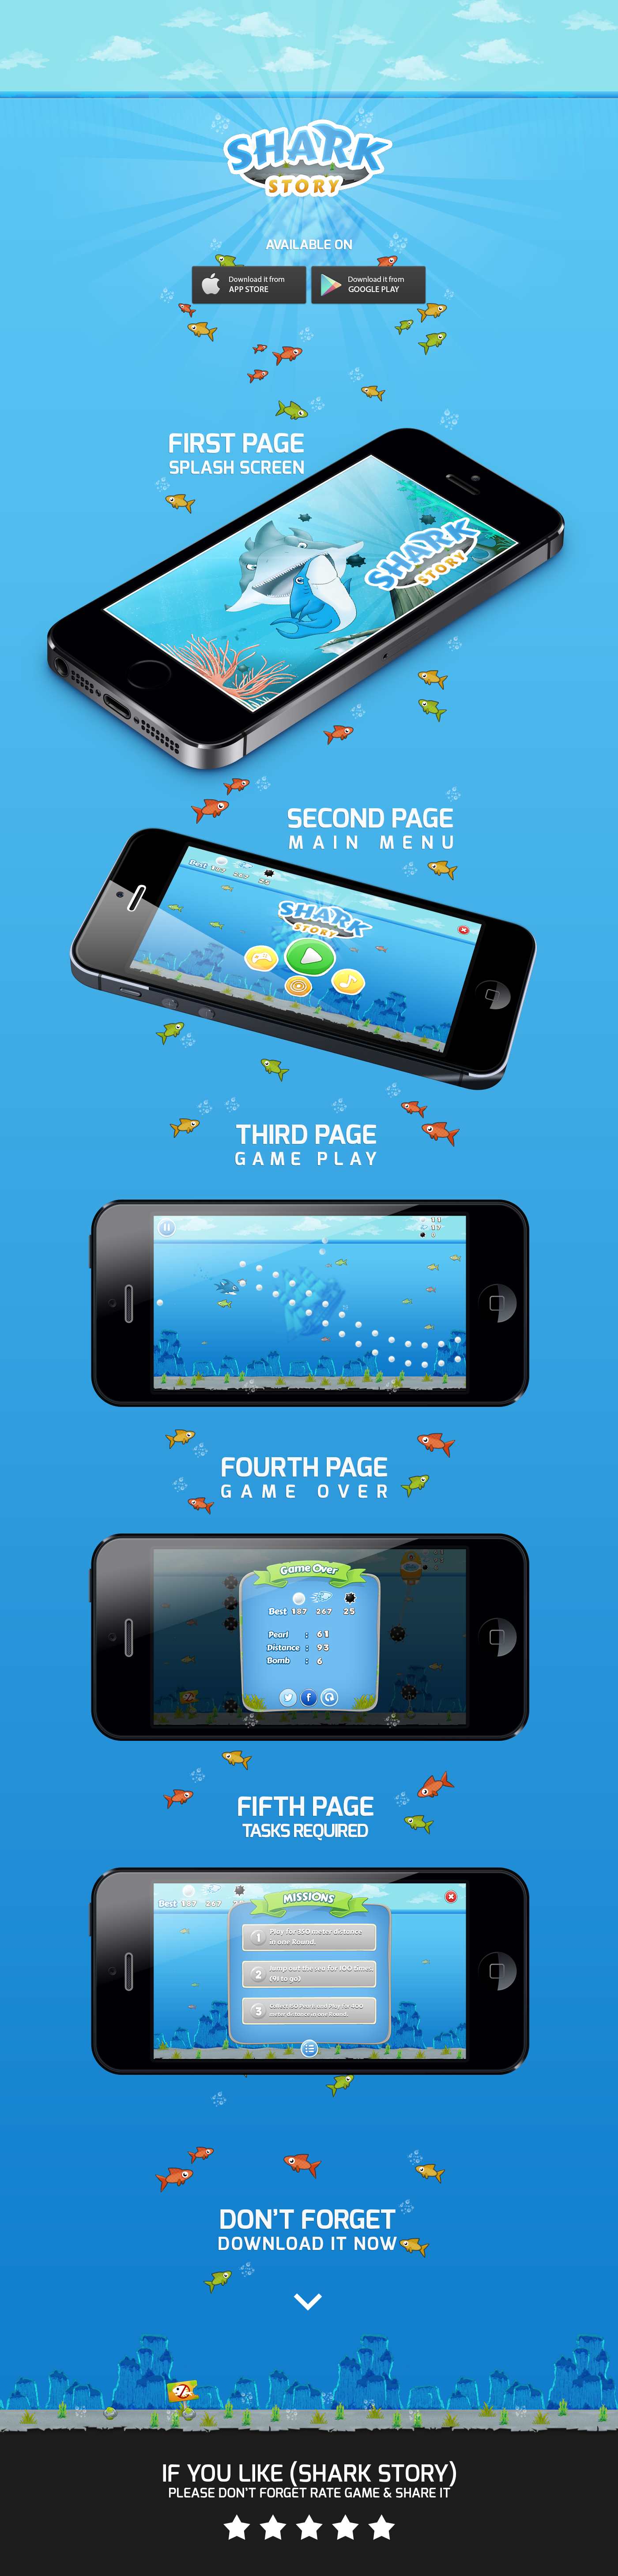 game ios android iphone Samsung play shark fish story modern free nice sea pearl